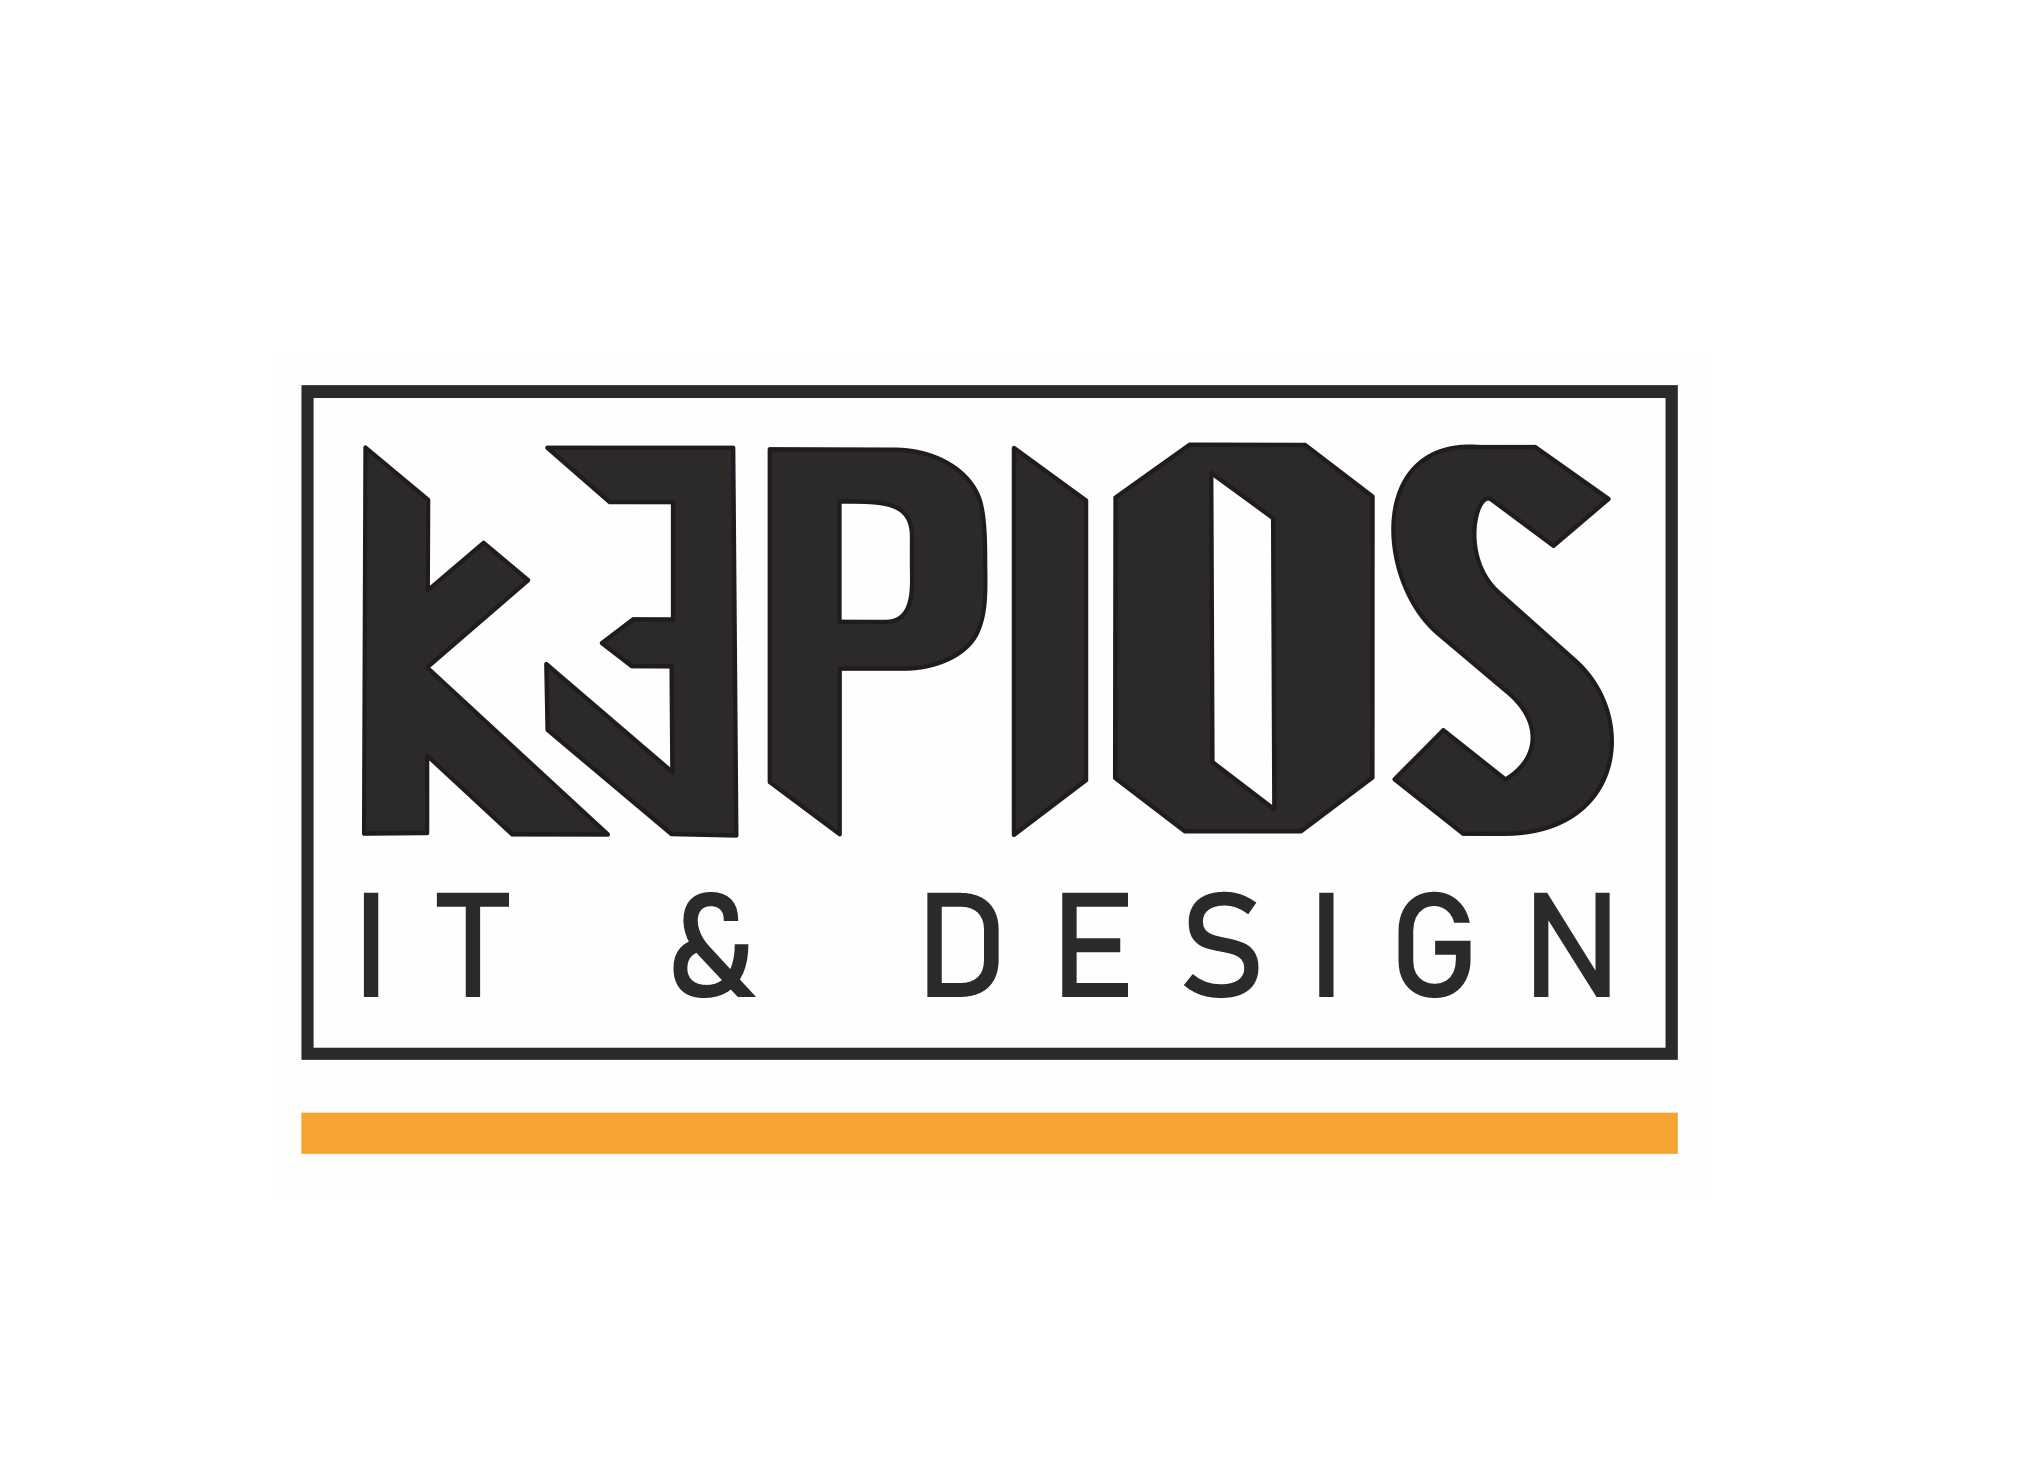 KEPIOS - IT & DESIGN in Barßel